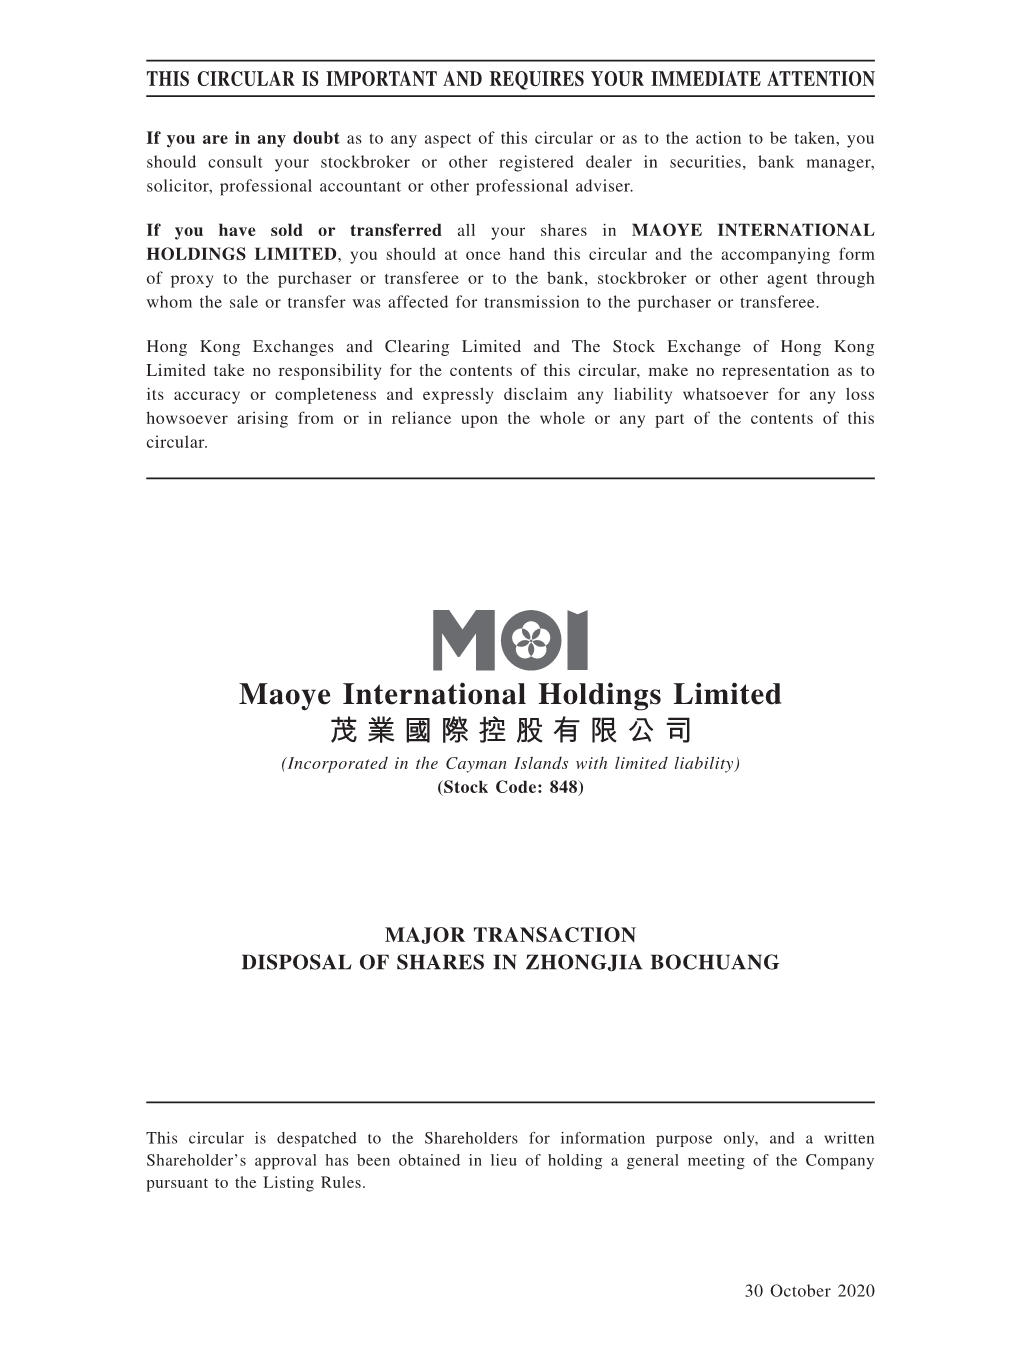 Maoye International Holdings Limited